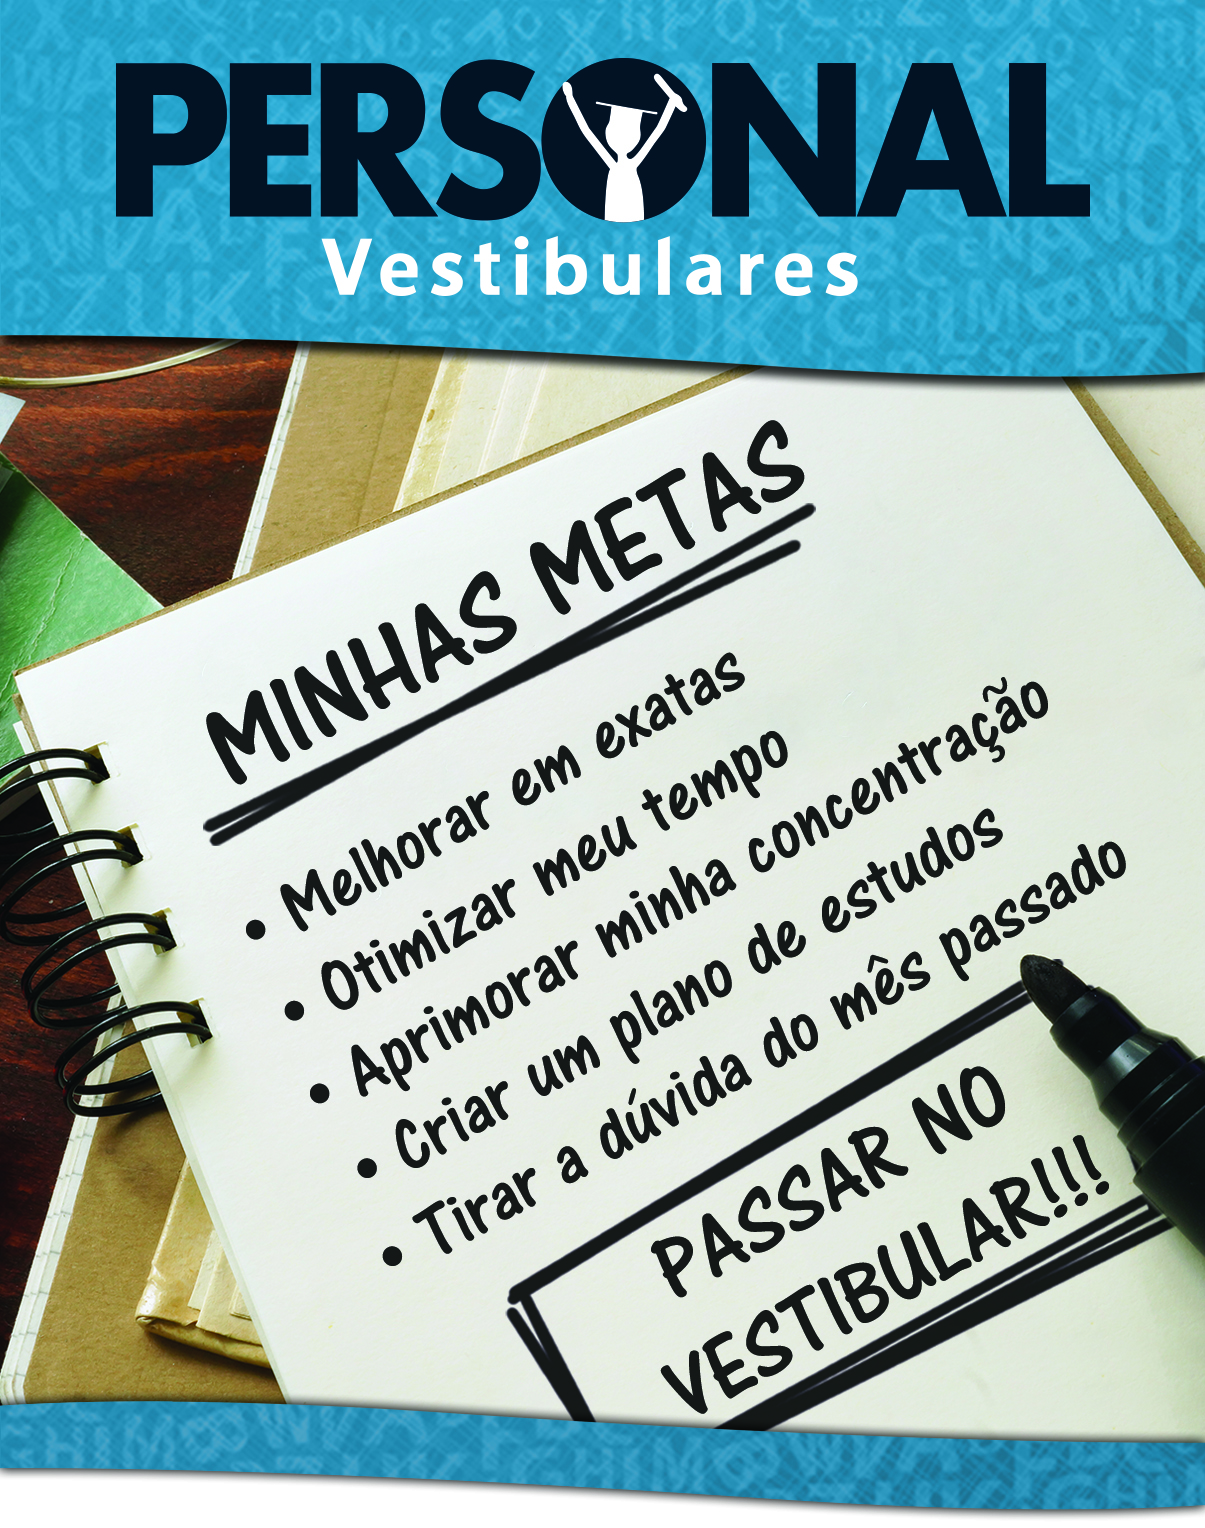 Personal Vestibulares - Coaching Educacional em So Caetano do Sul